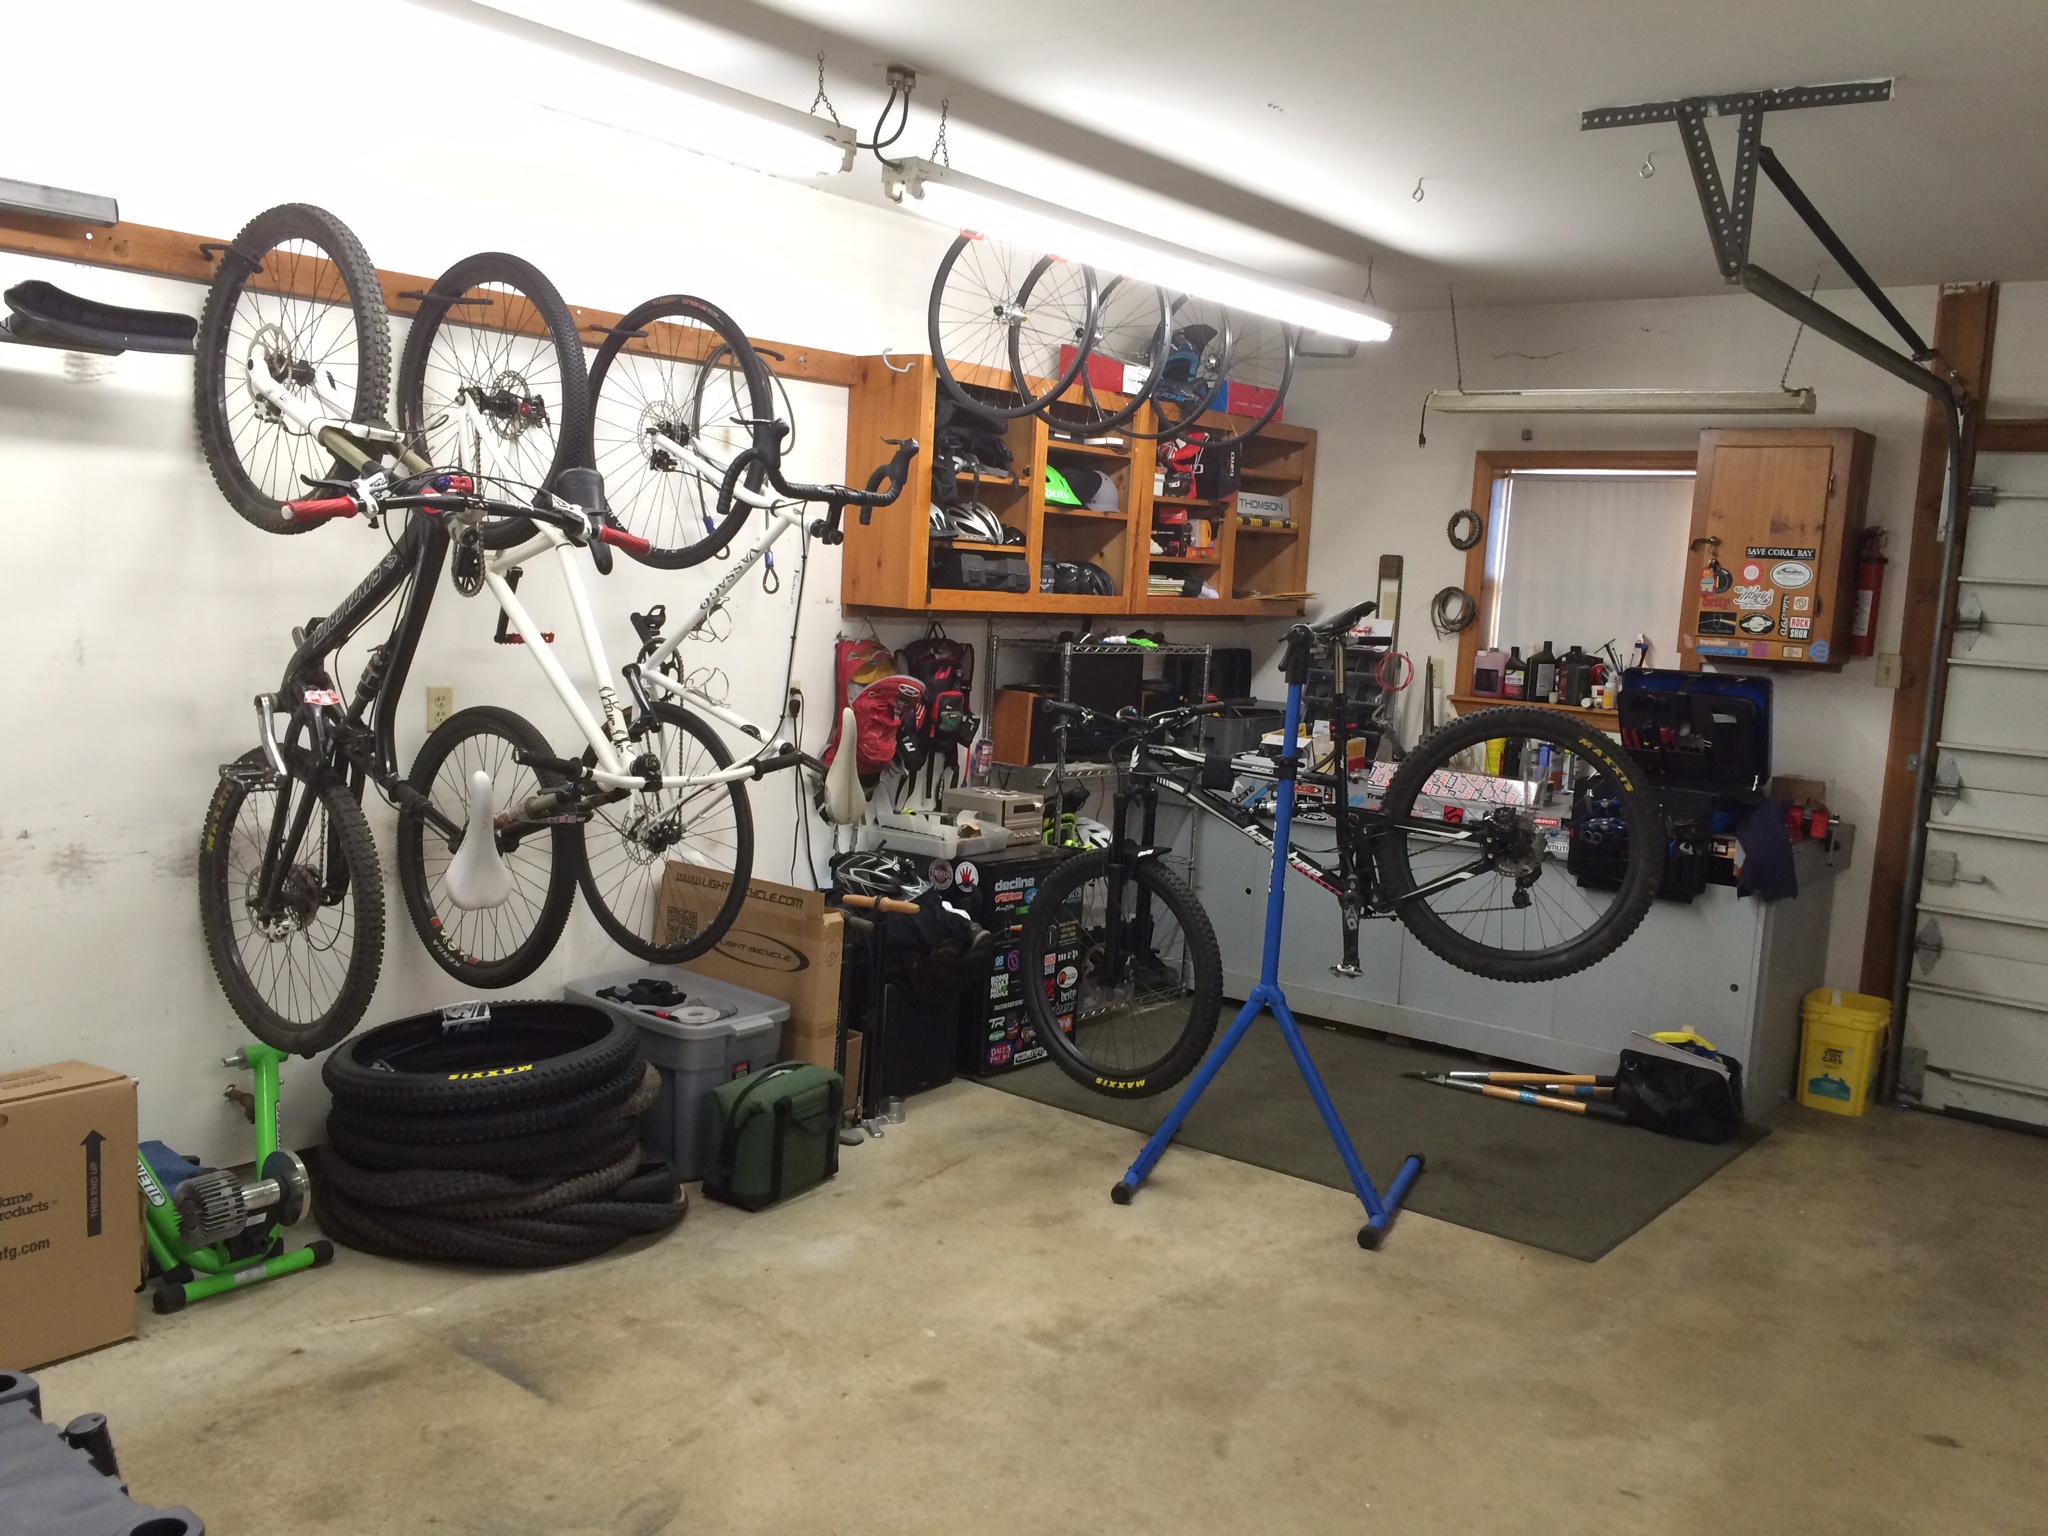 Bike storage at home - garage/shed ideas? | Ridemonkey Forums